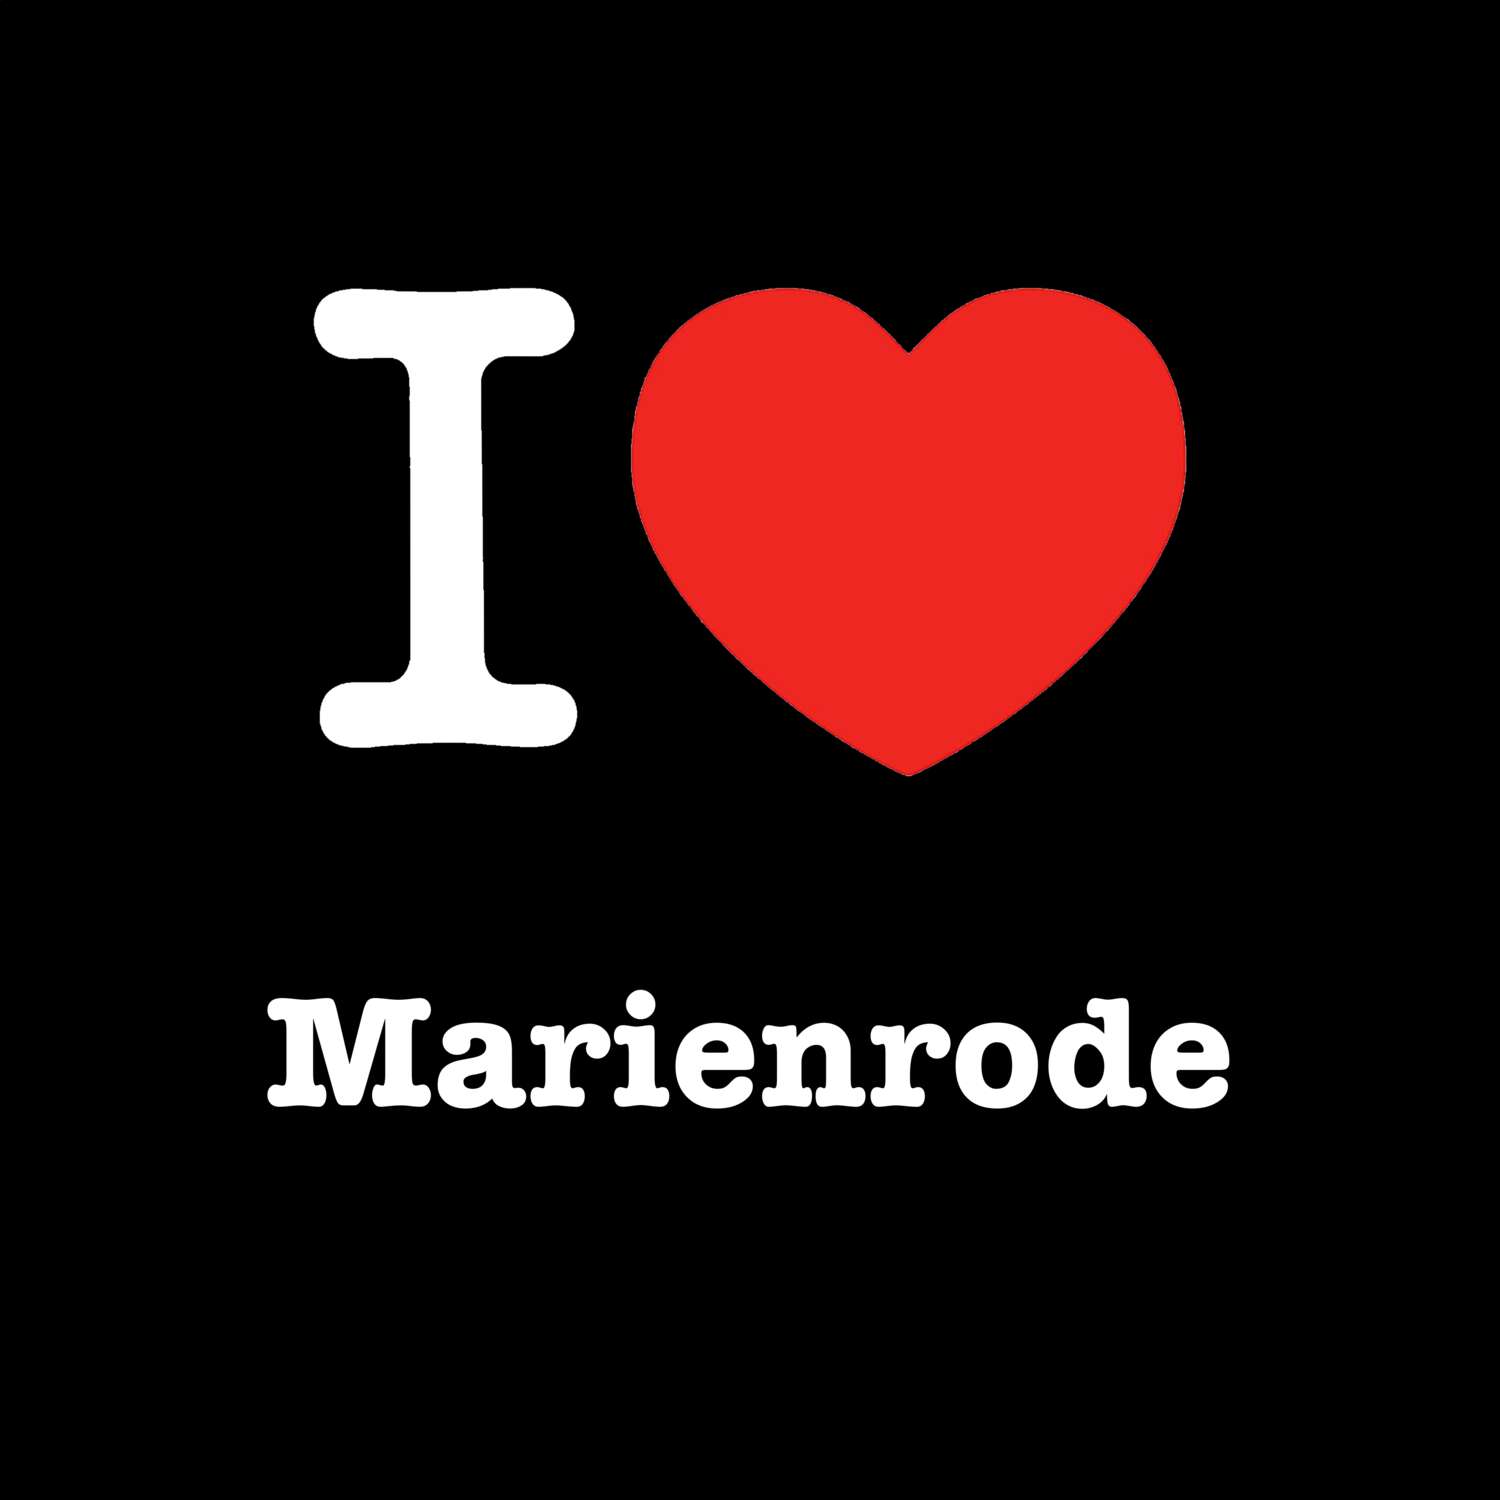 Marienrode T-Shirt »I love«